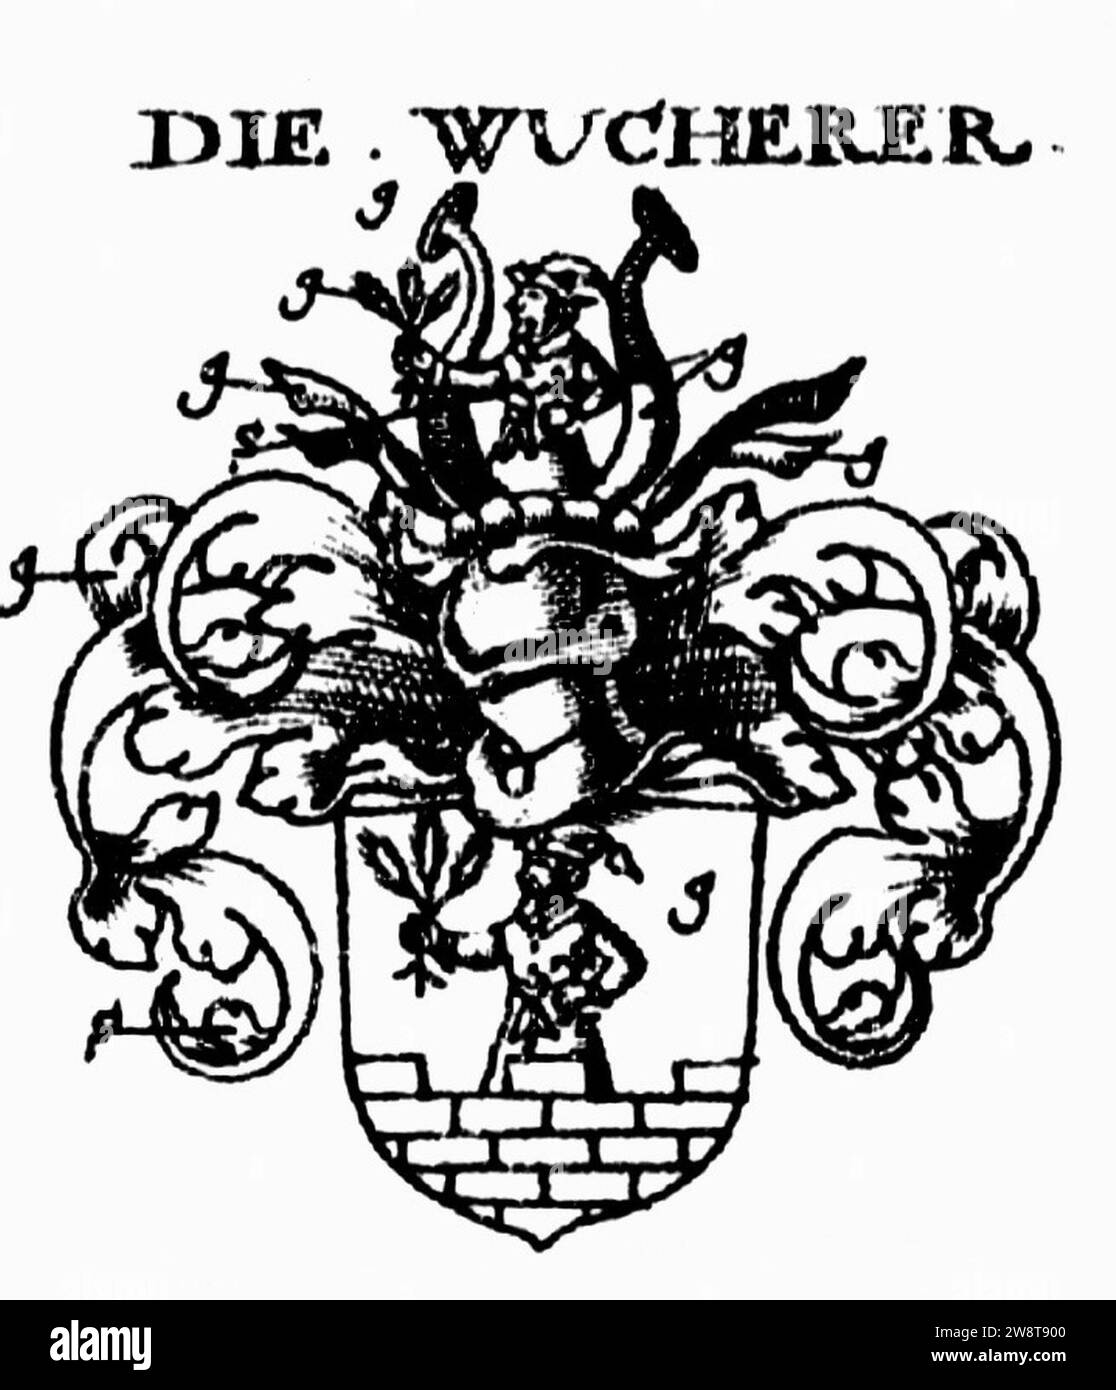 Wucherer-Wappen Sbm Nordl. Stock Photo